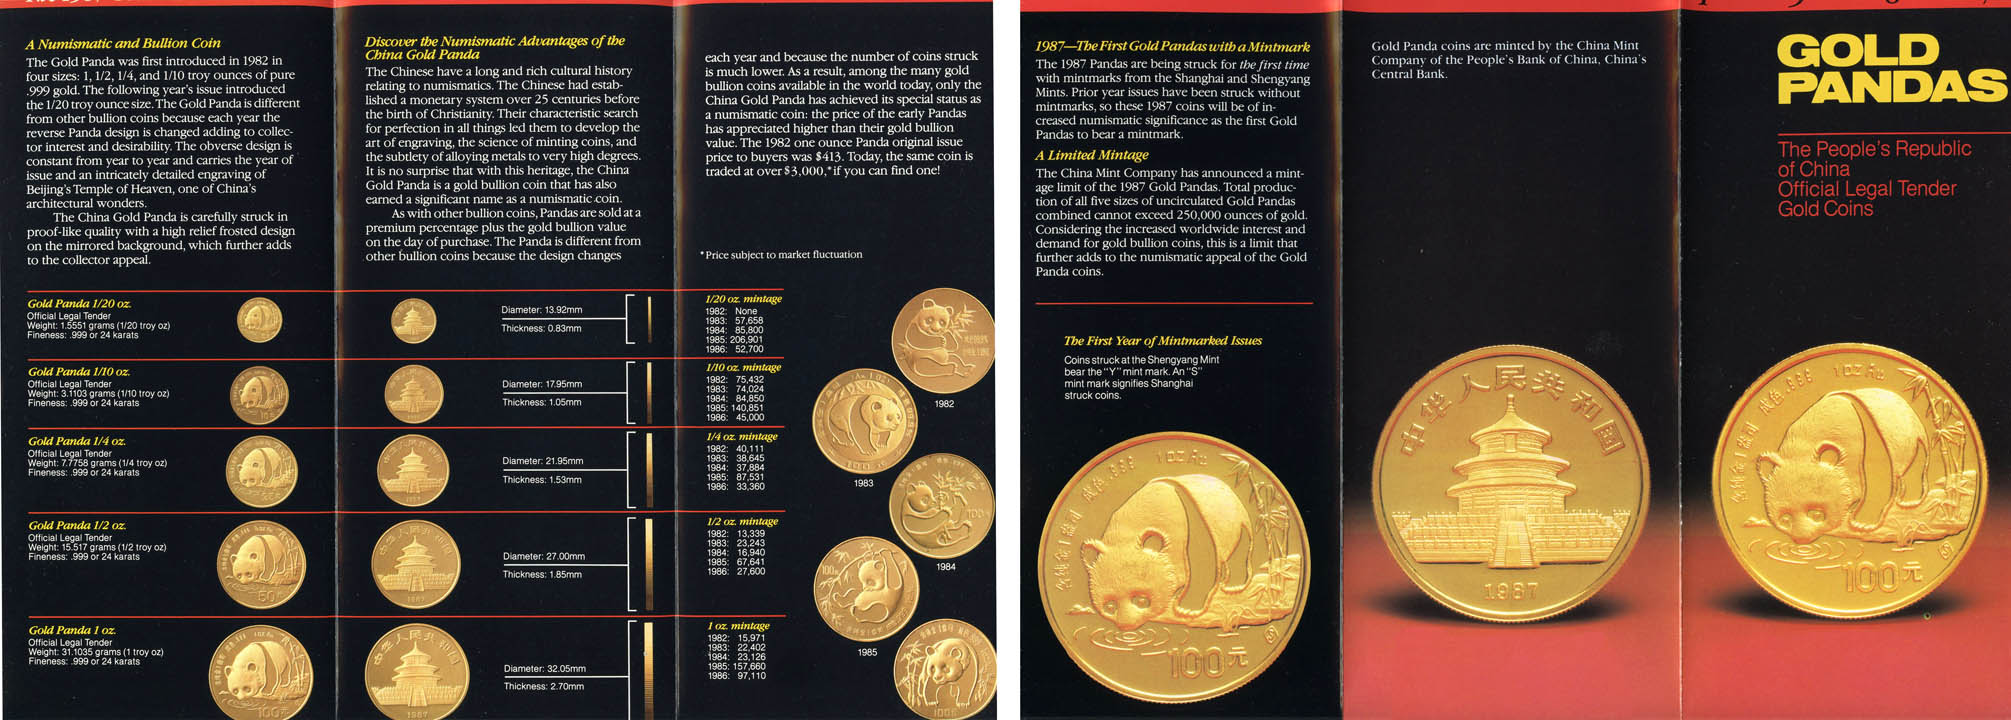 Gold Panda Coin Brochure 1989